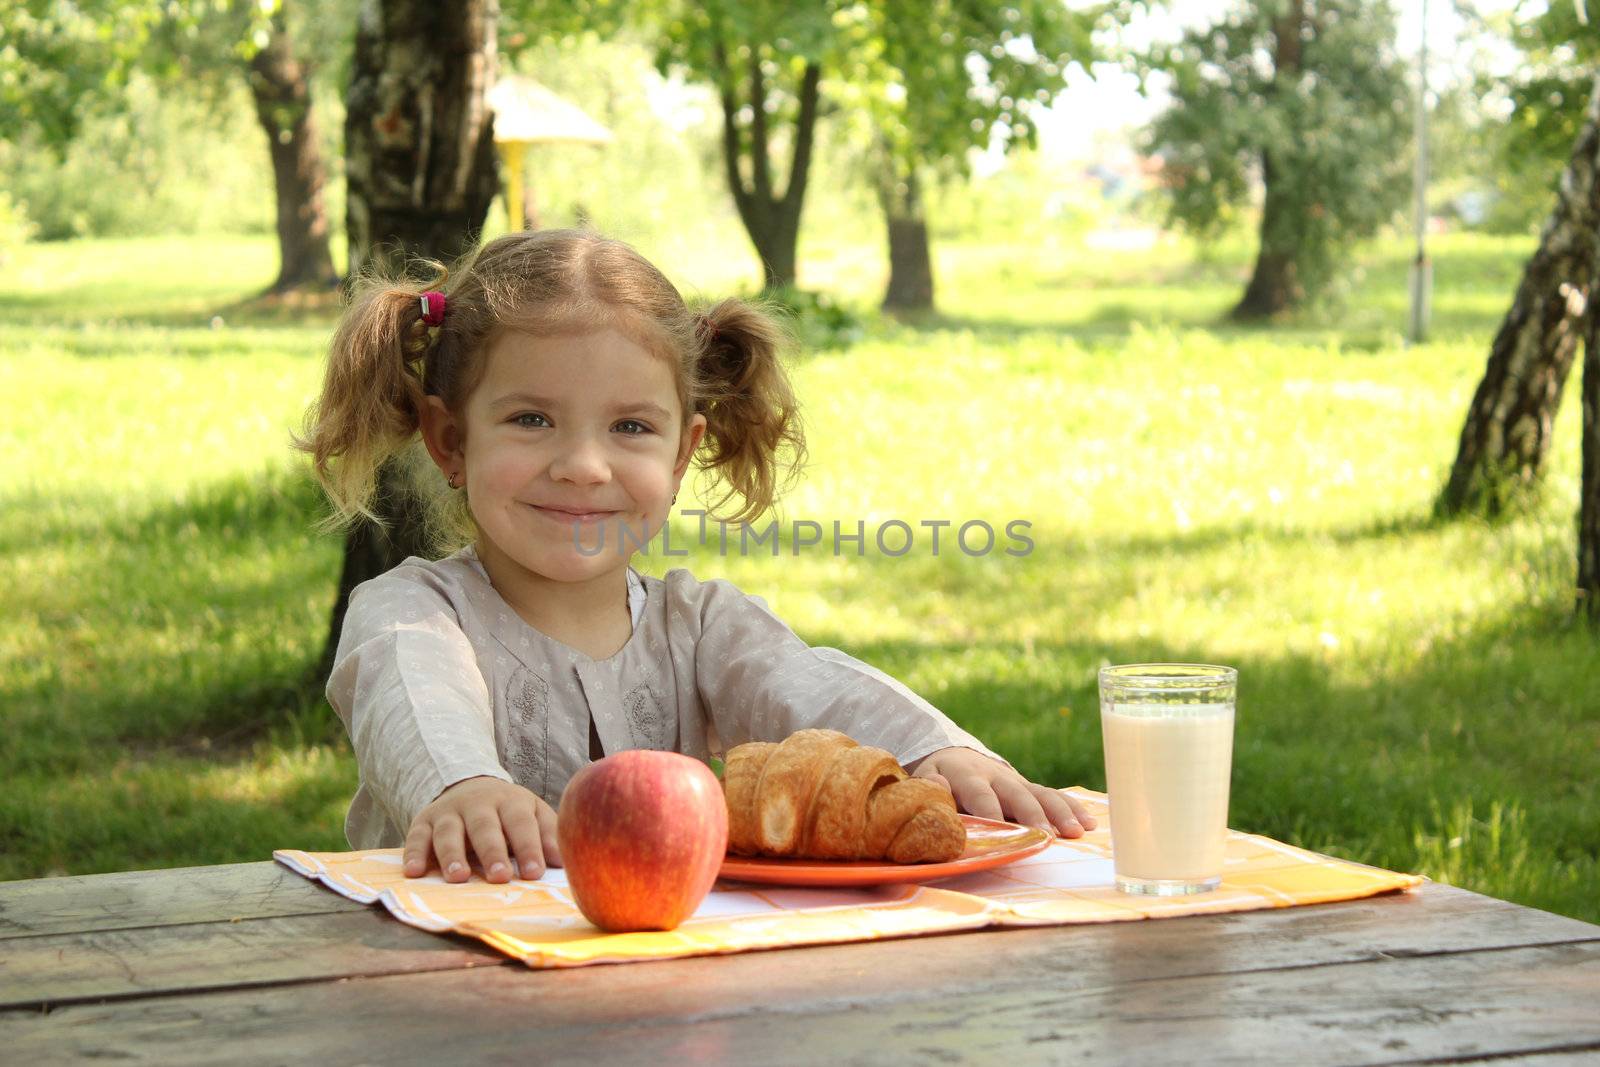 little girl with healthy breakfast